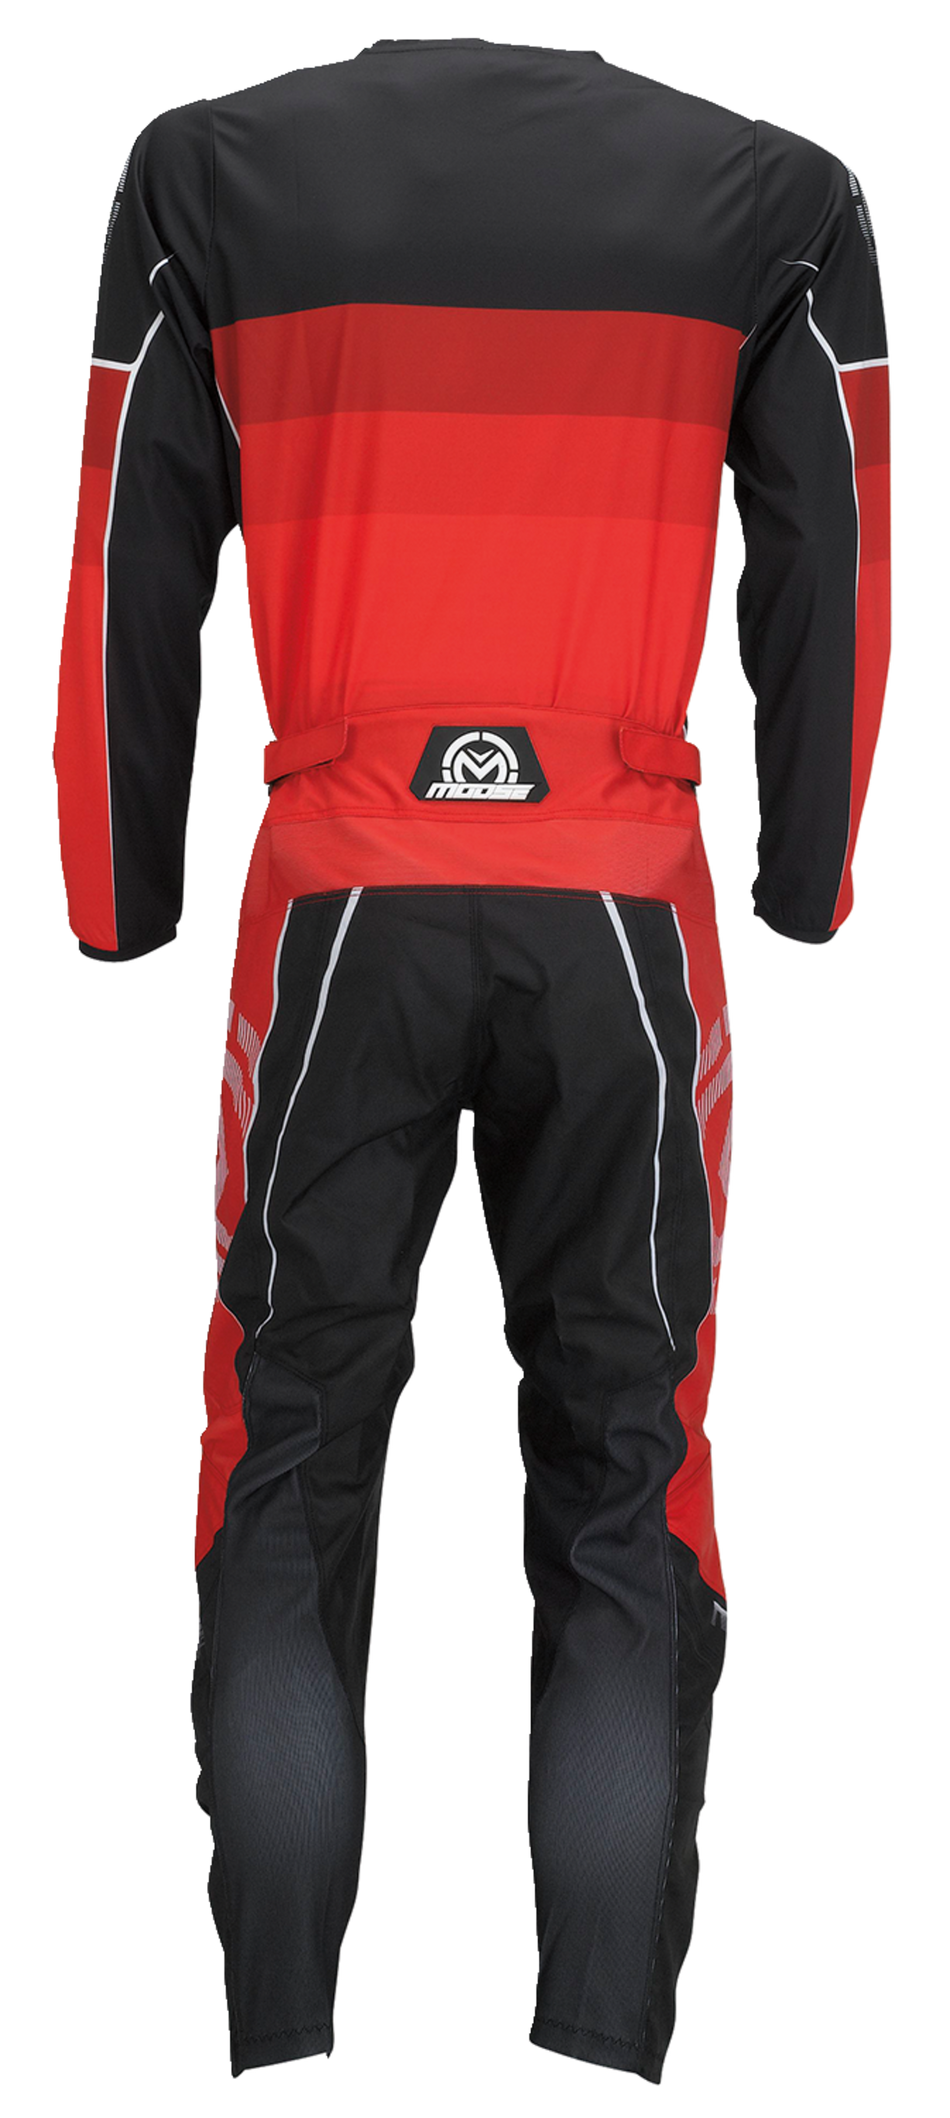 MOOSE RACING Qualifier® Jersey - Red/Black - Large 2910-7182